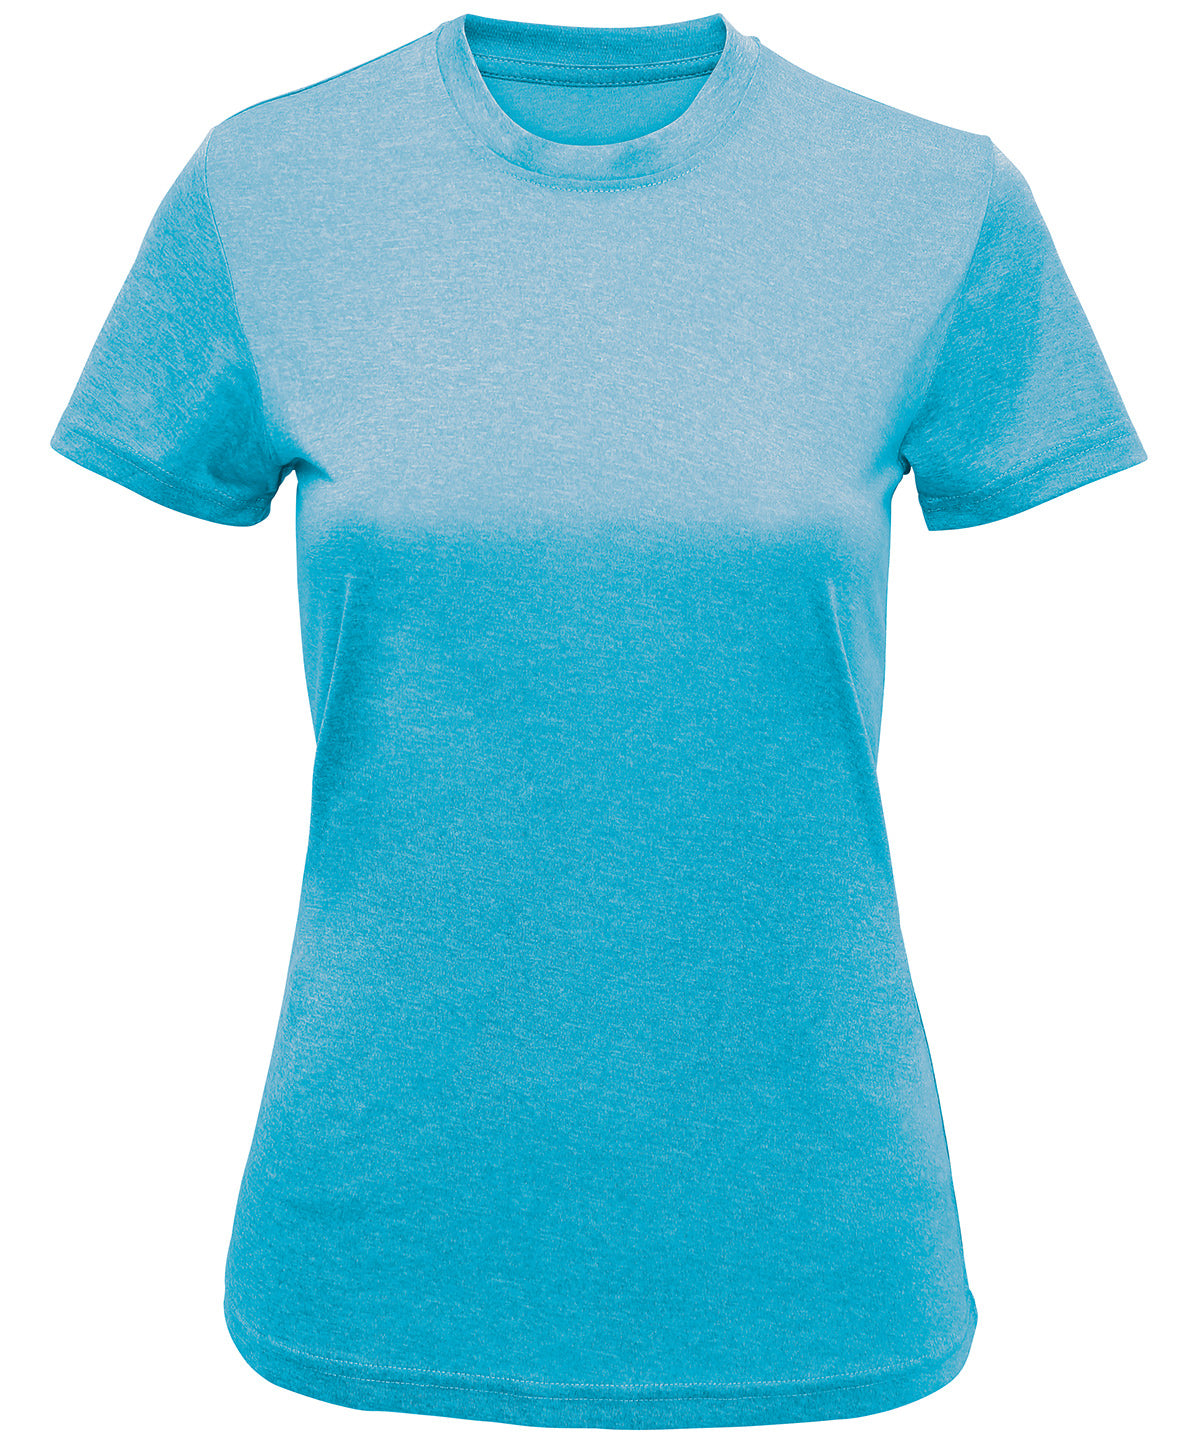 Stuttermabolir - Women's TriDri® Recycled Performance T-shirt